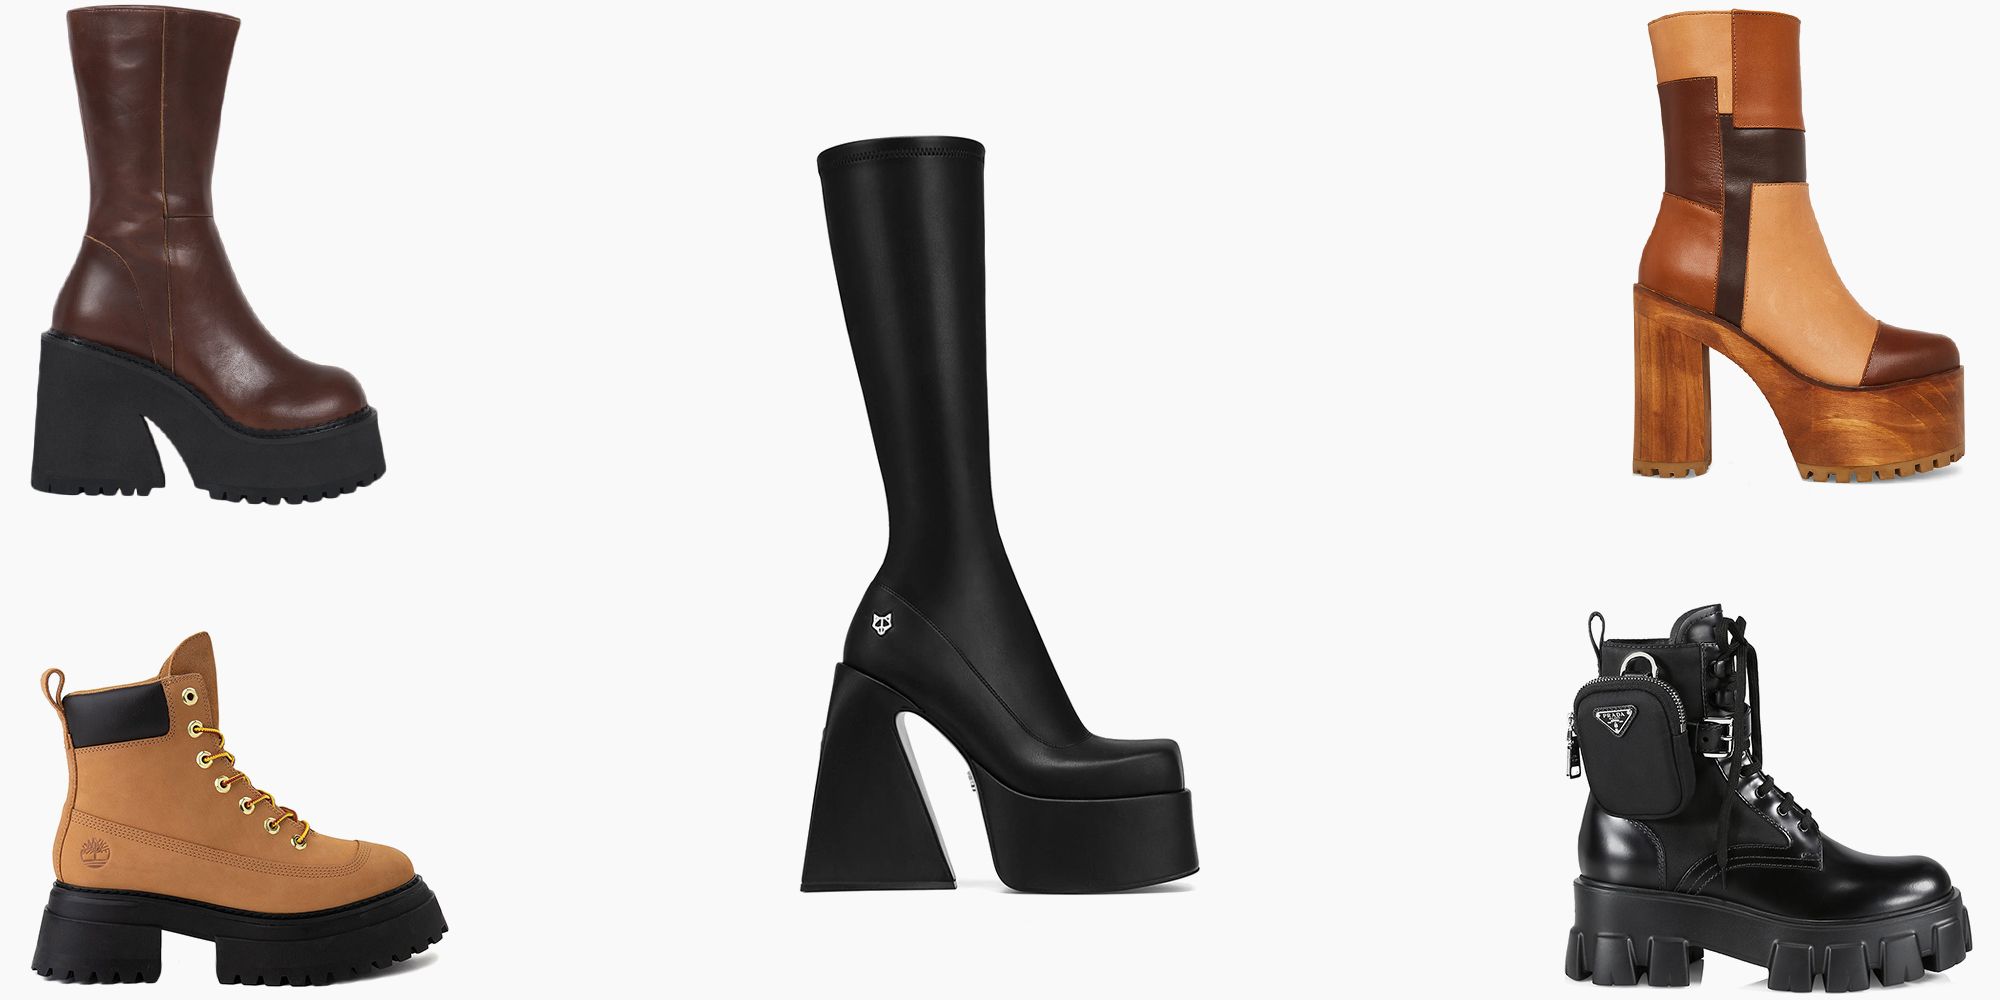 Rachel Zoe Dressy Suede Stretch Over Knee High Heels Boots Black Size 7.5 |  eBay